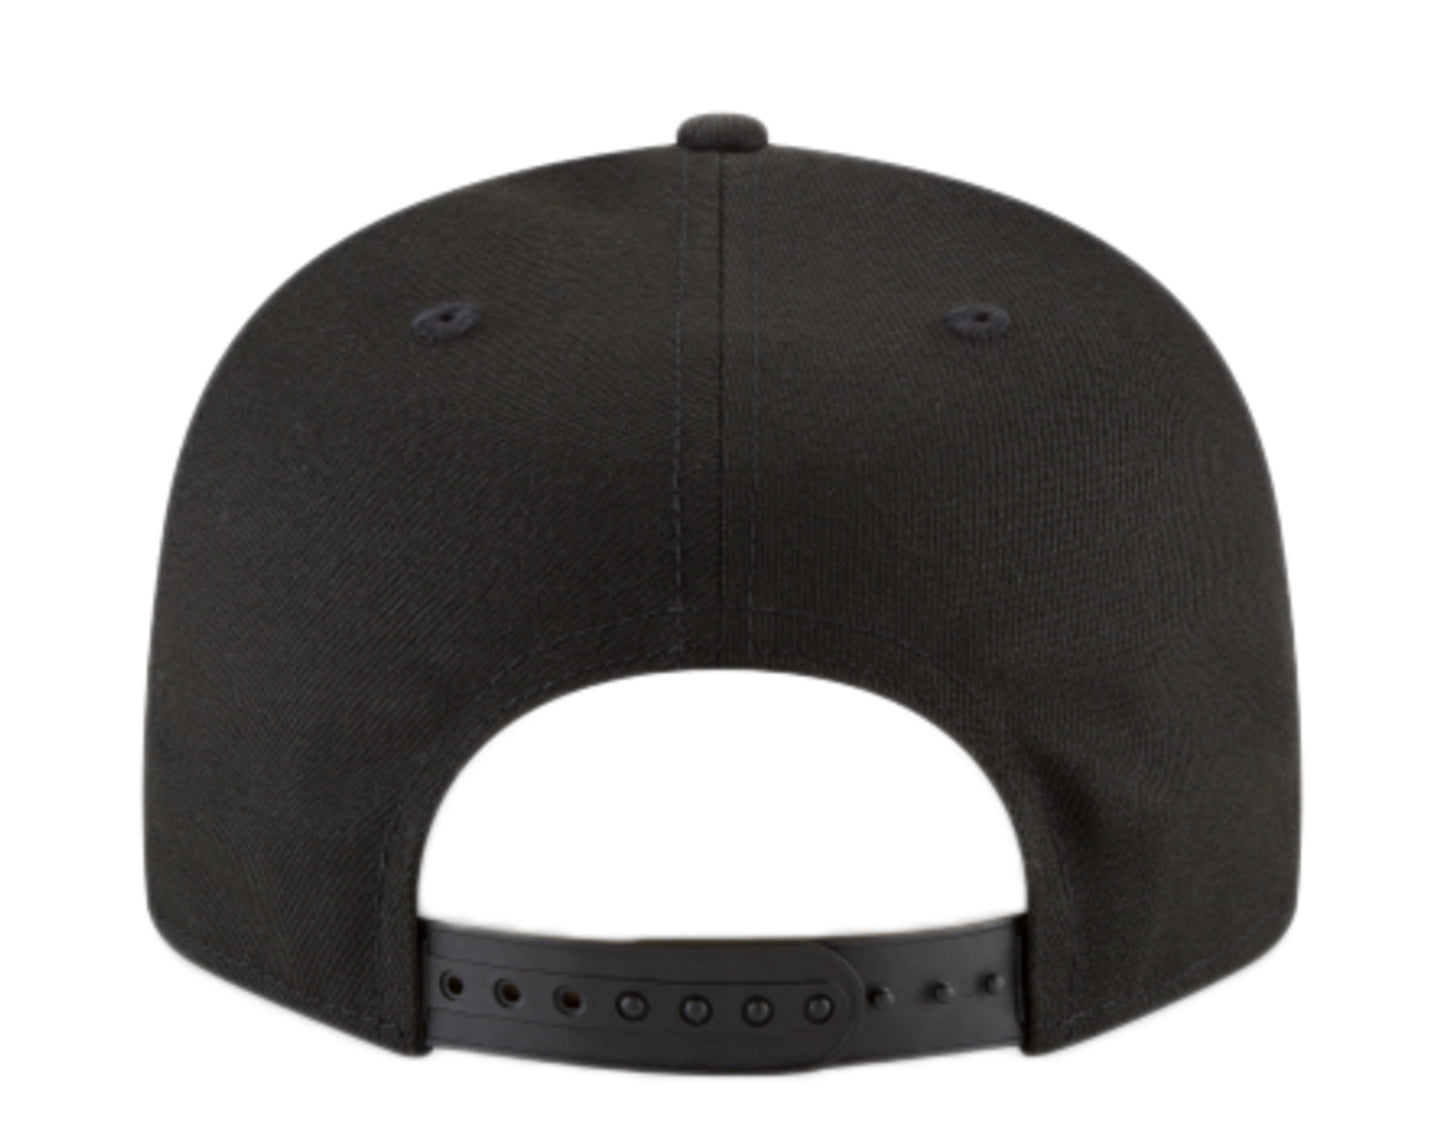 New Era 9Fifty MLB Florida Marlins Basic Snapback Hat